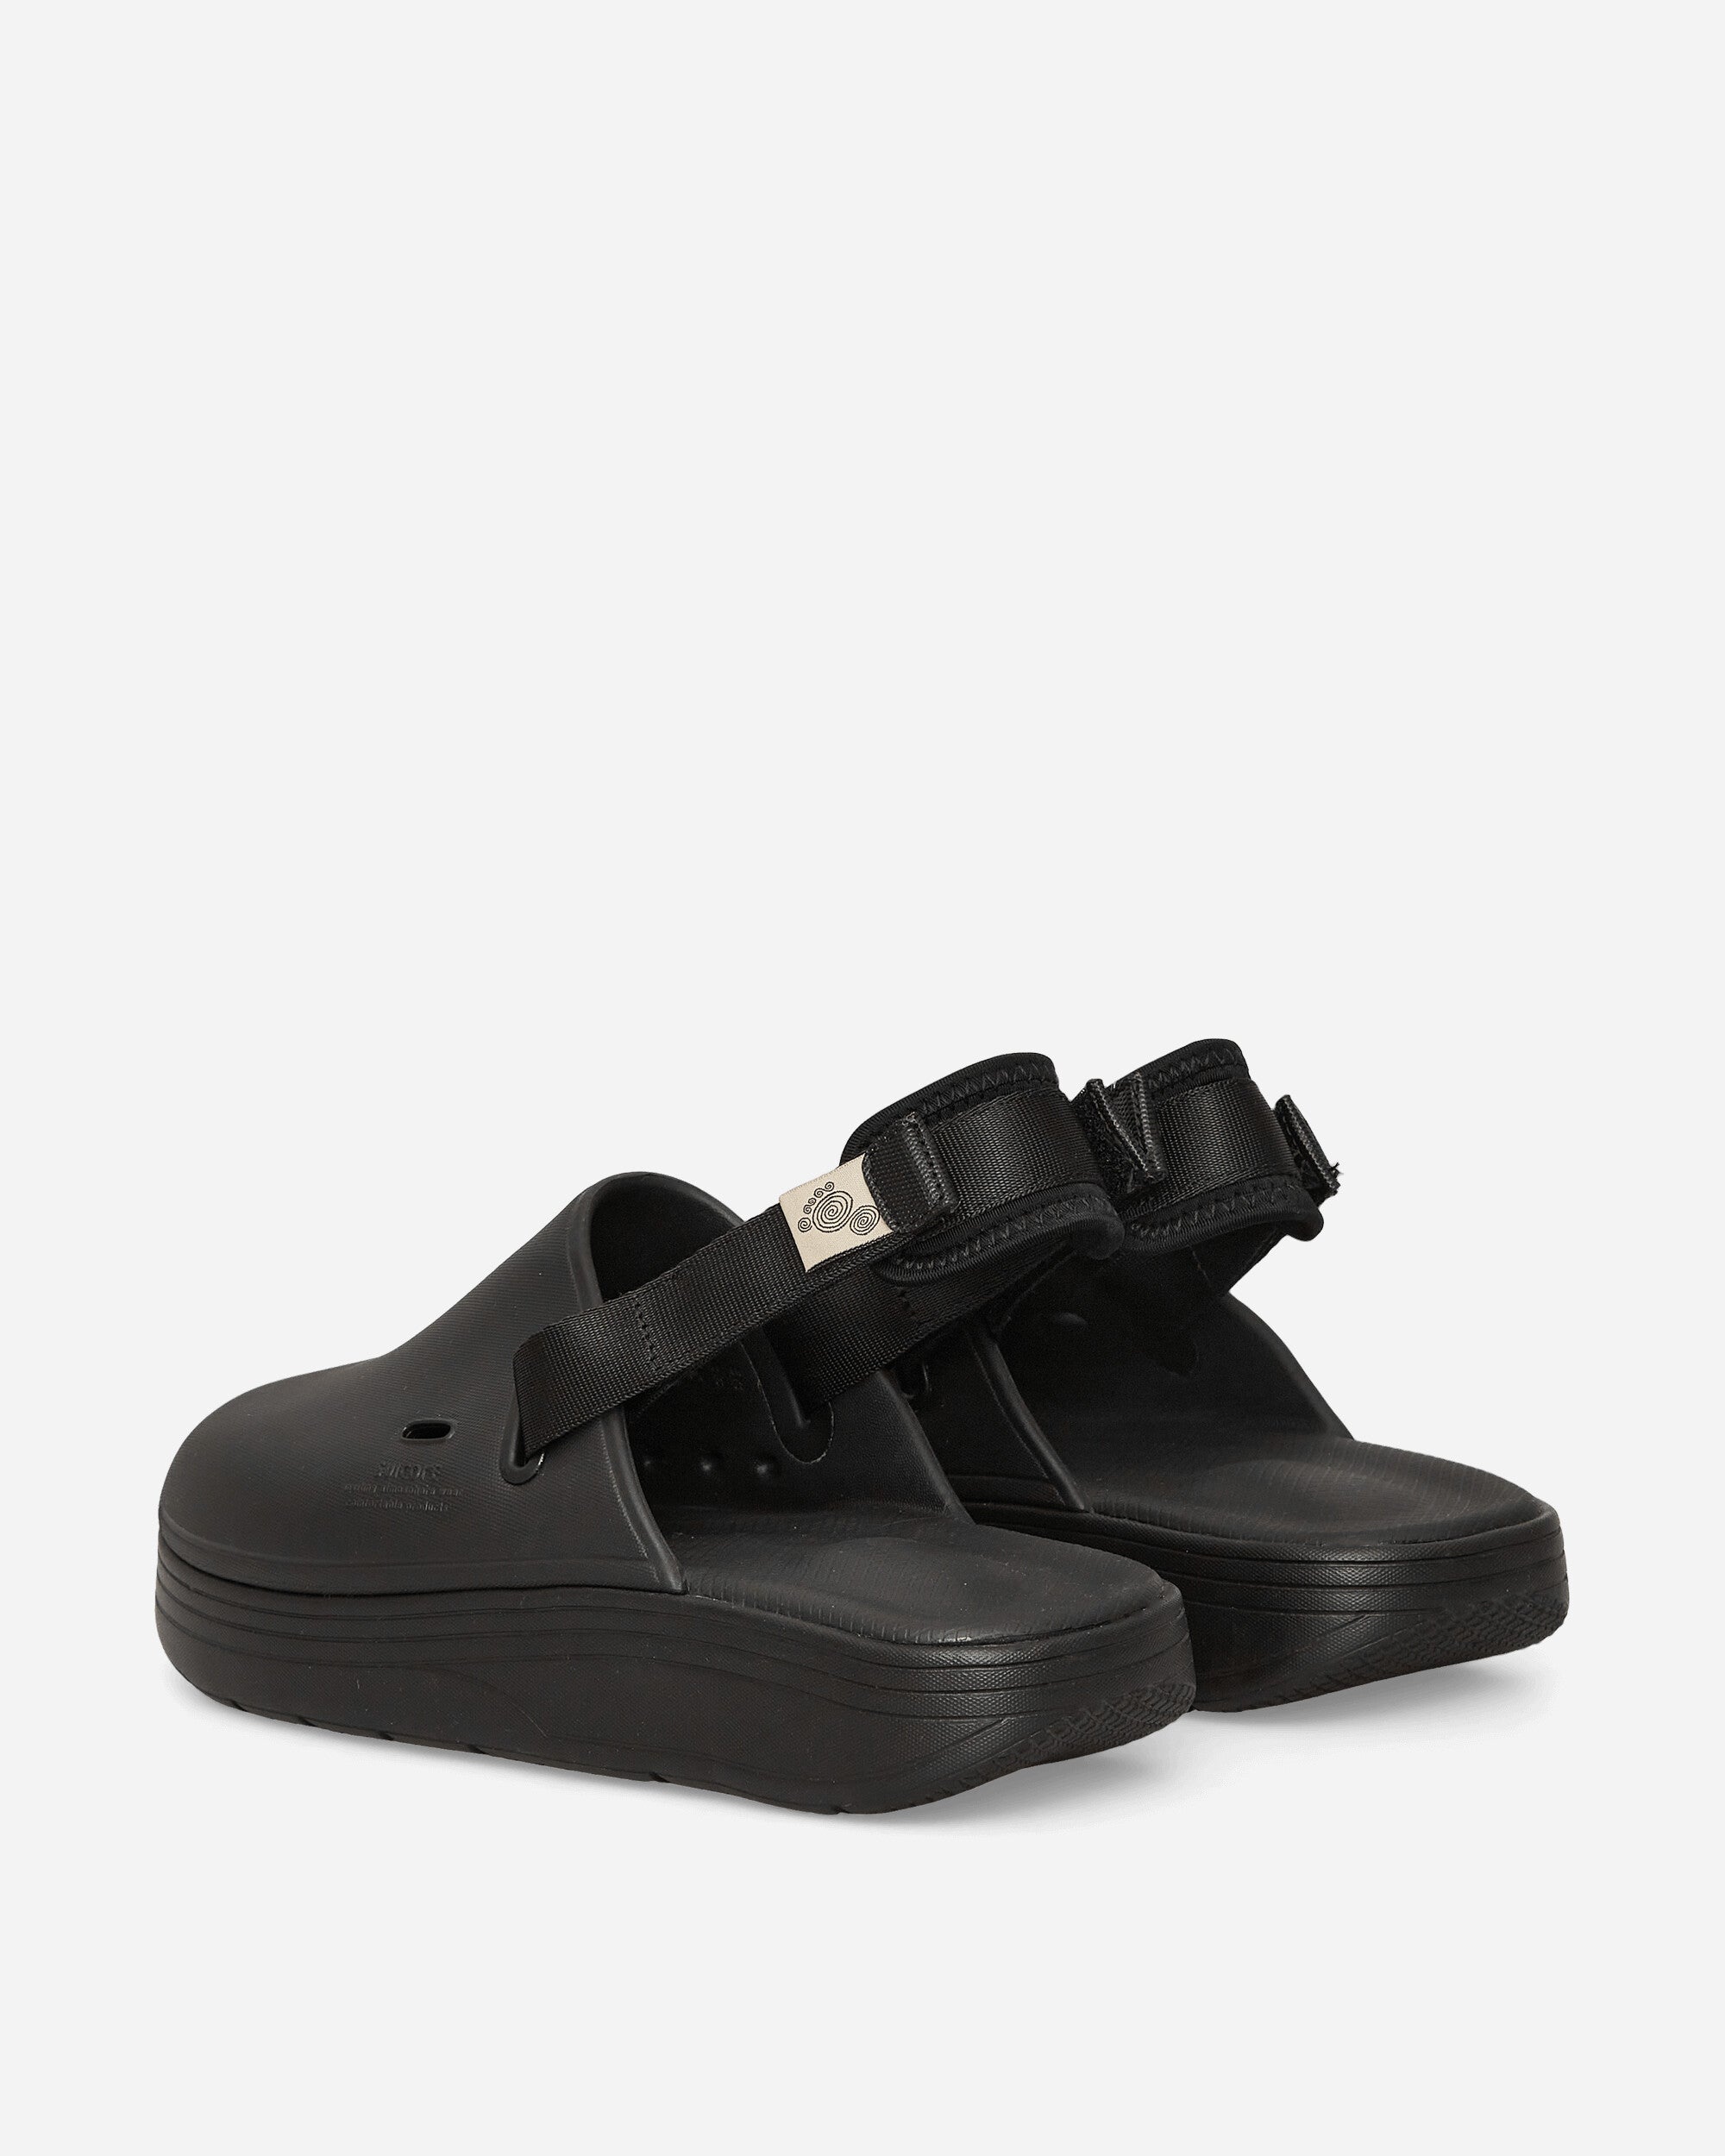 Suicoke Cappo Black Sandals and Slides Sandals and Mules OGINJ03 BLK